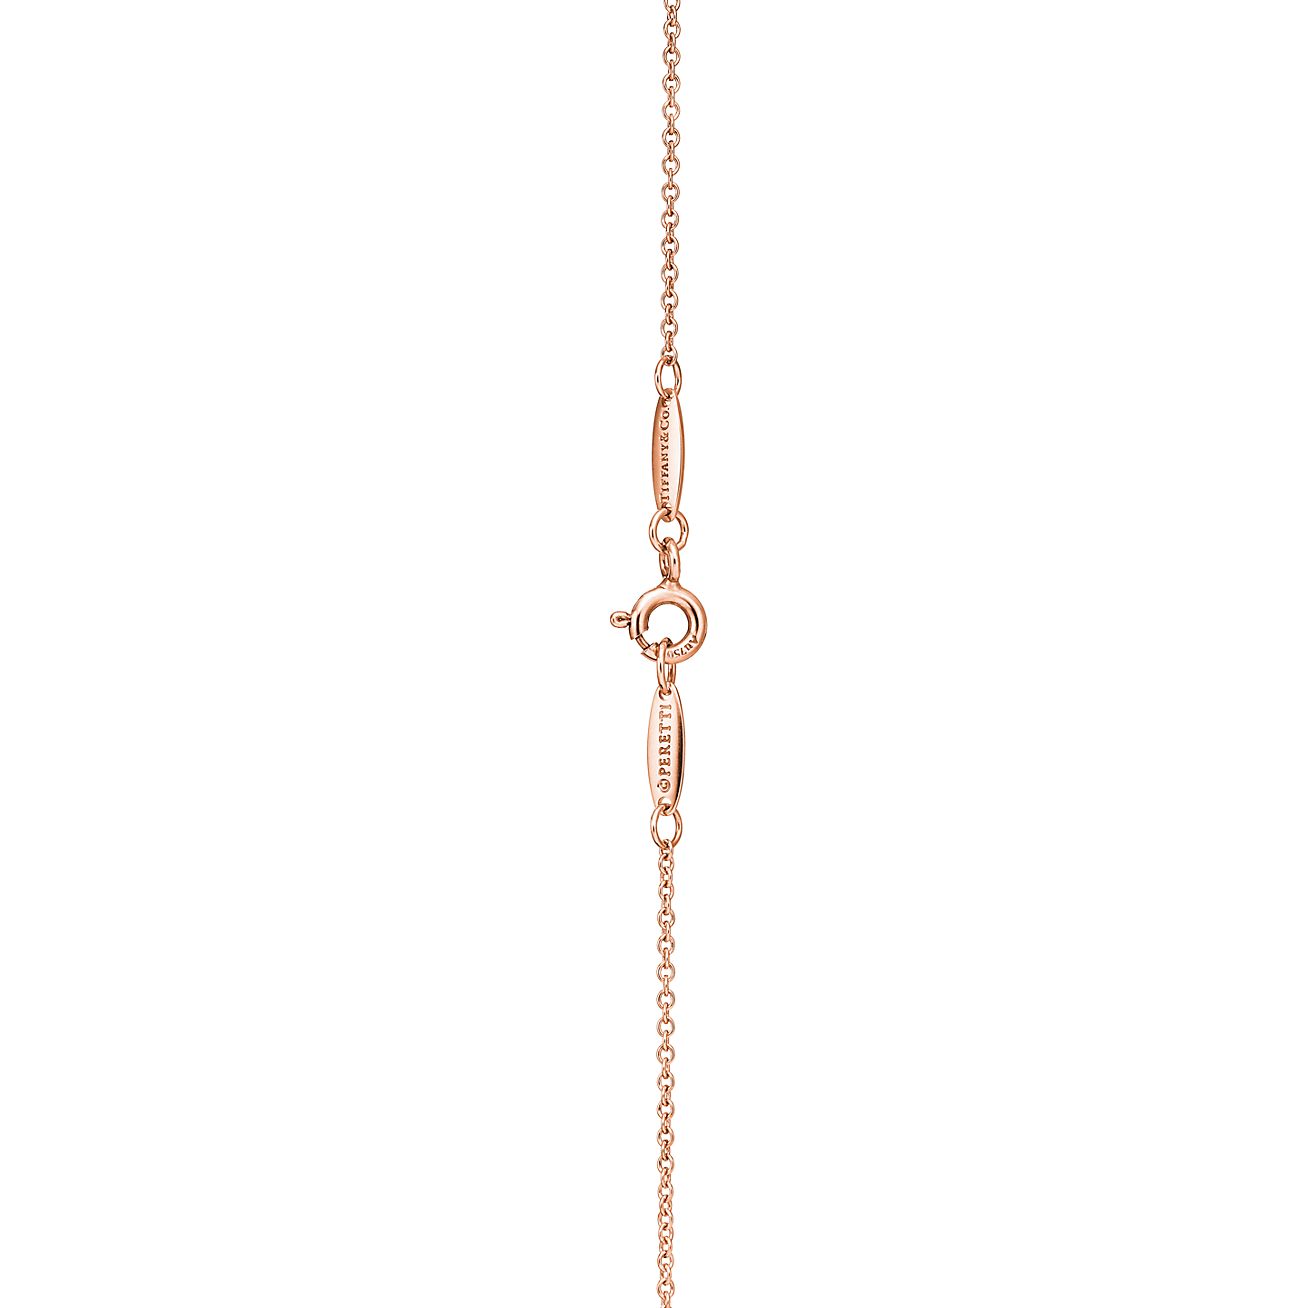 Elsa Peretti® Open Heart pendant in 18k rose gold. More sizes 